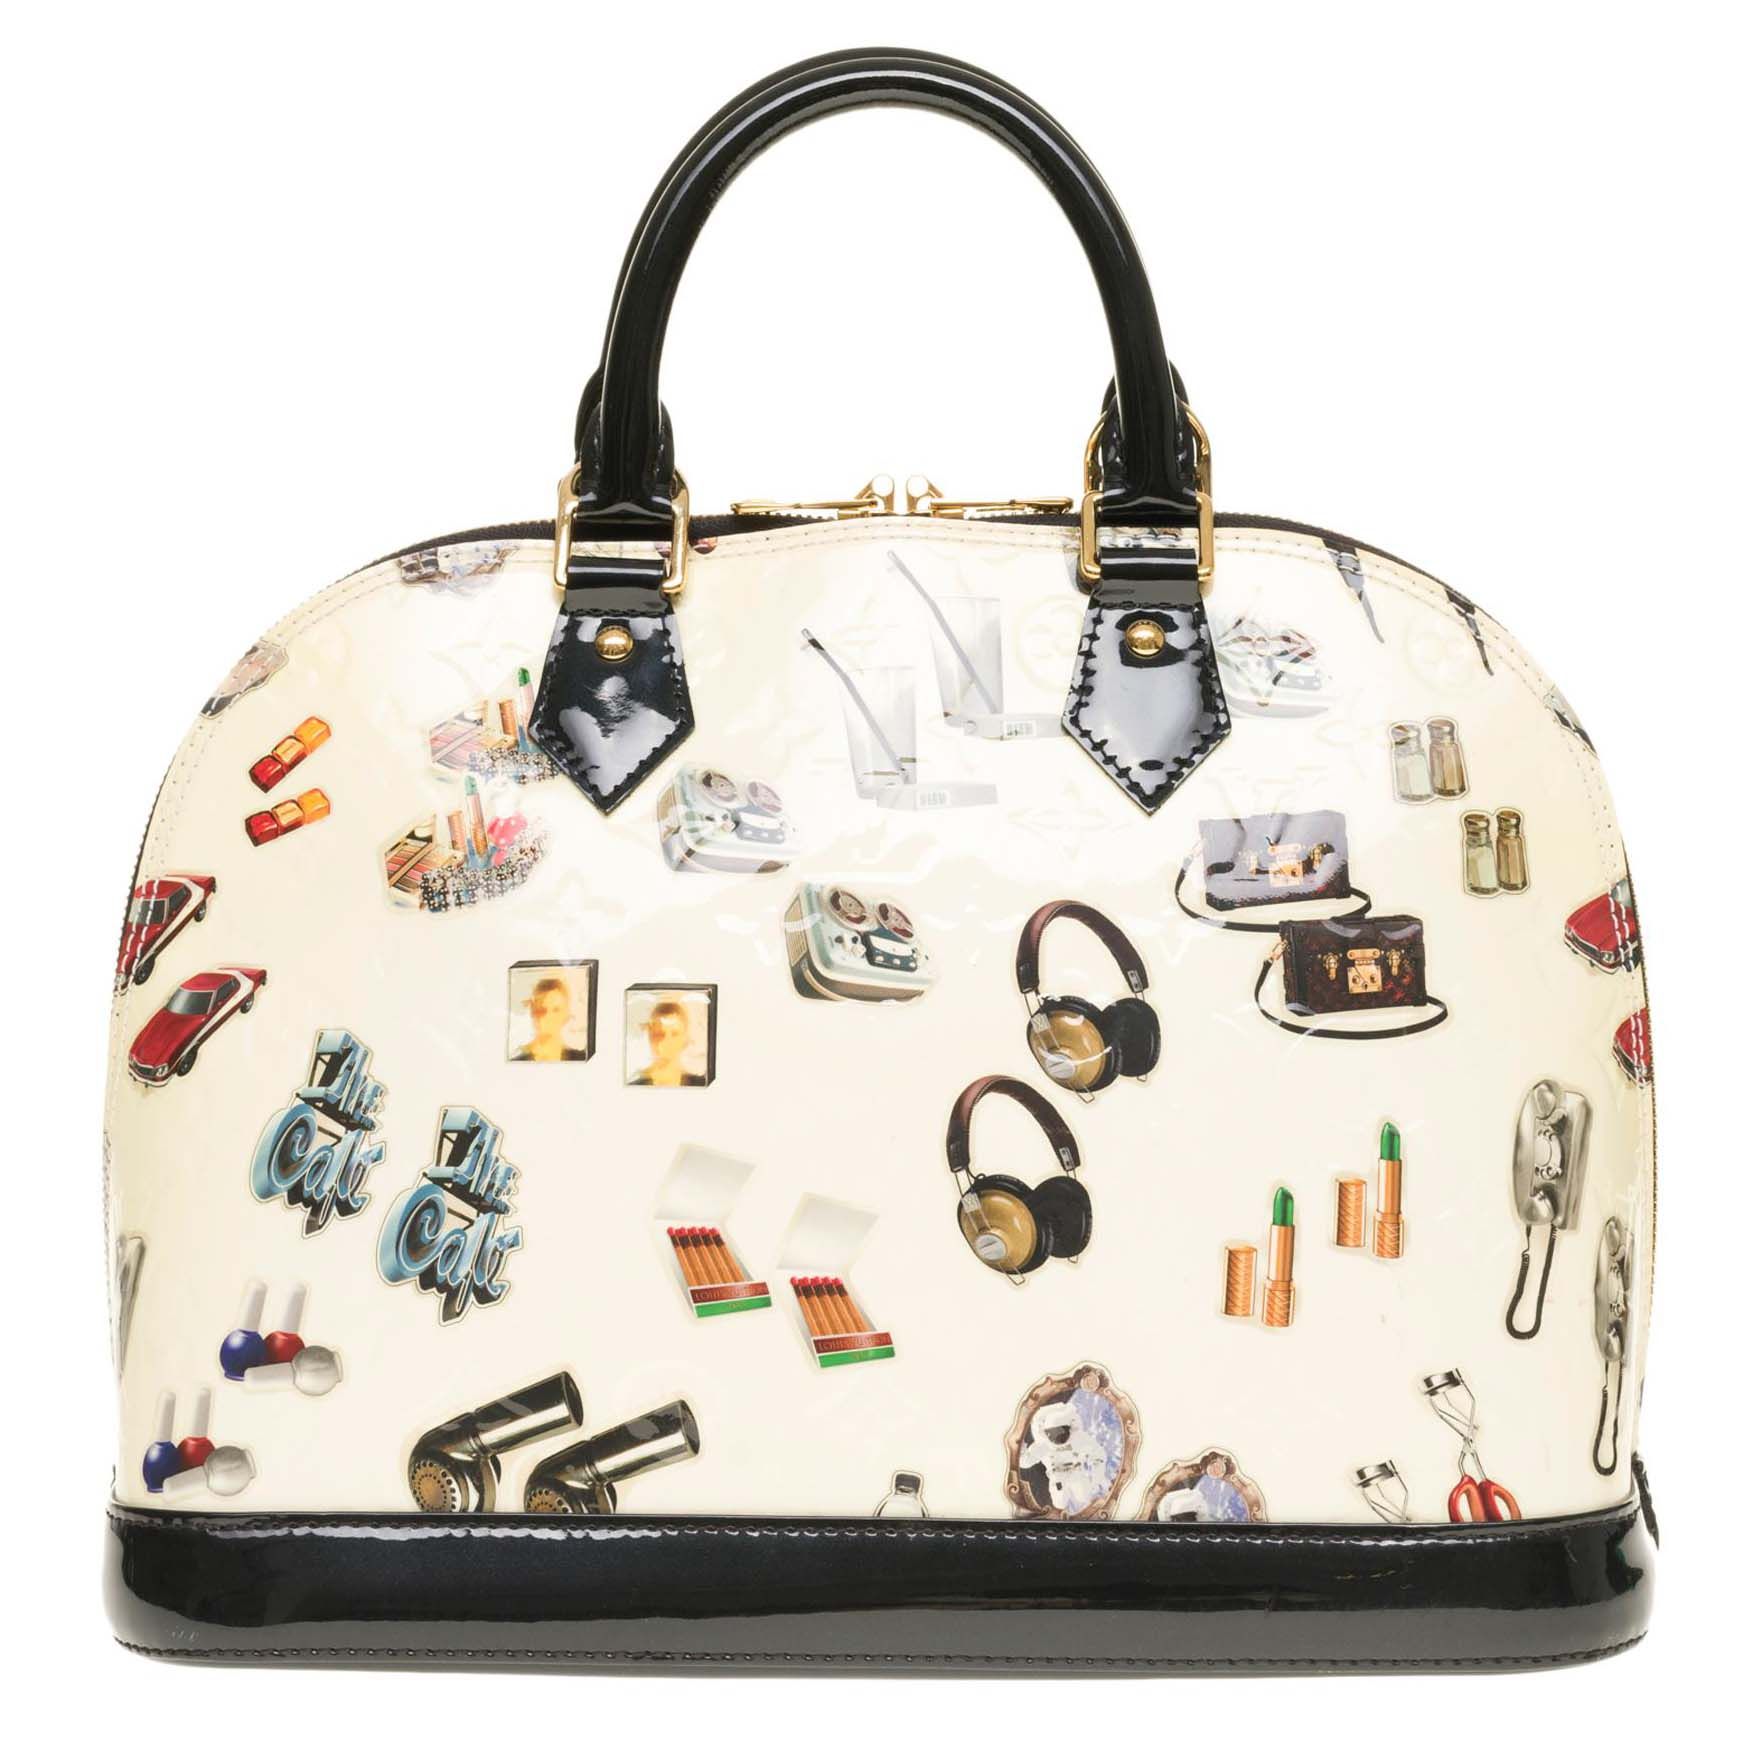 Louis Vuitton's Alma bag - the story. - Still in fashion